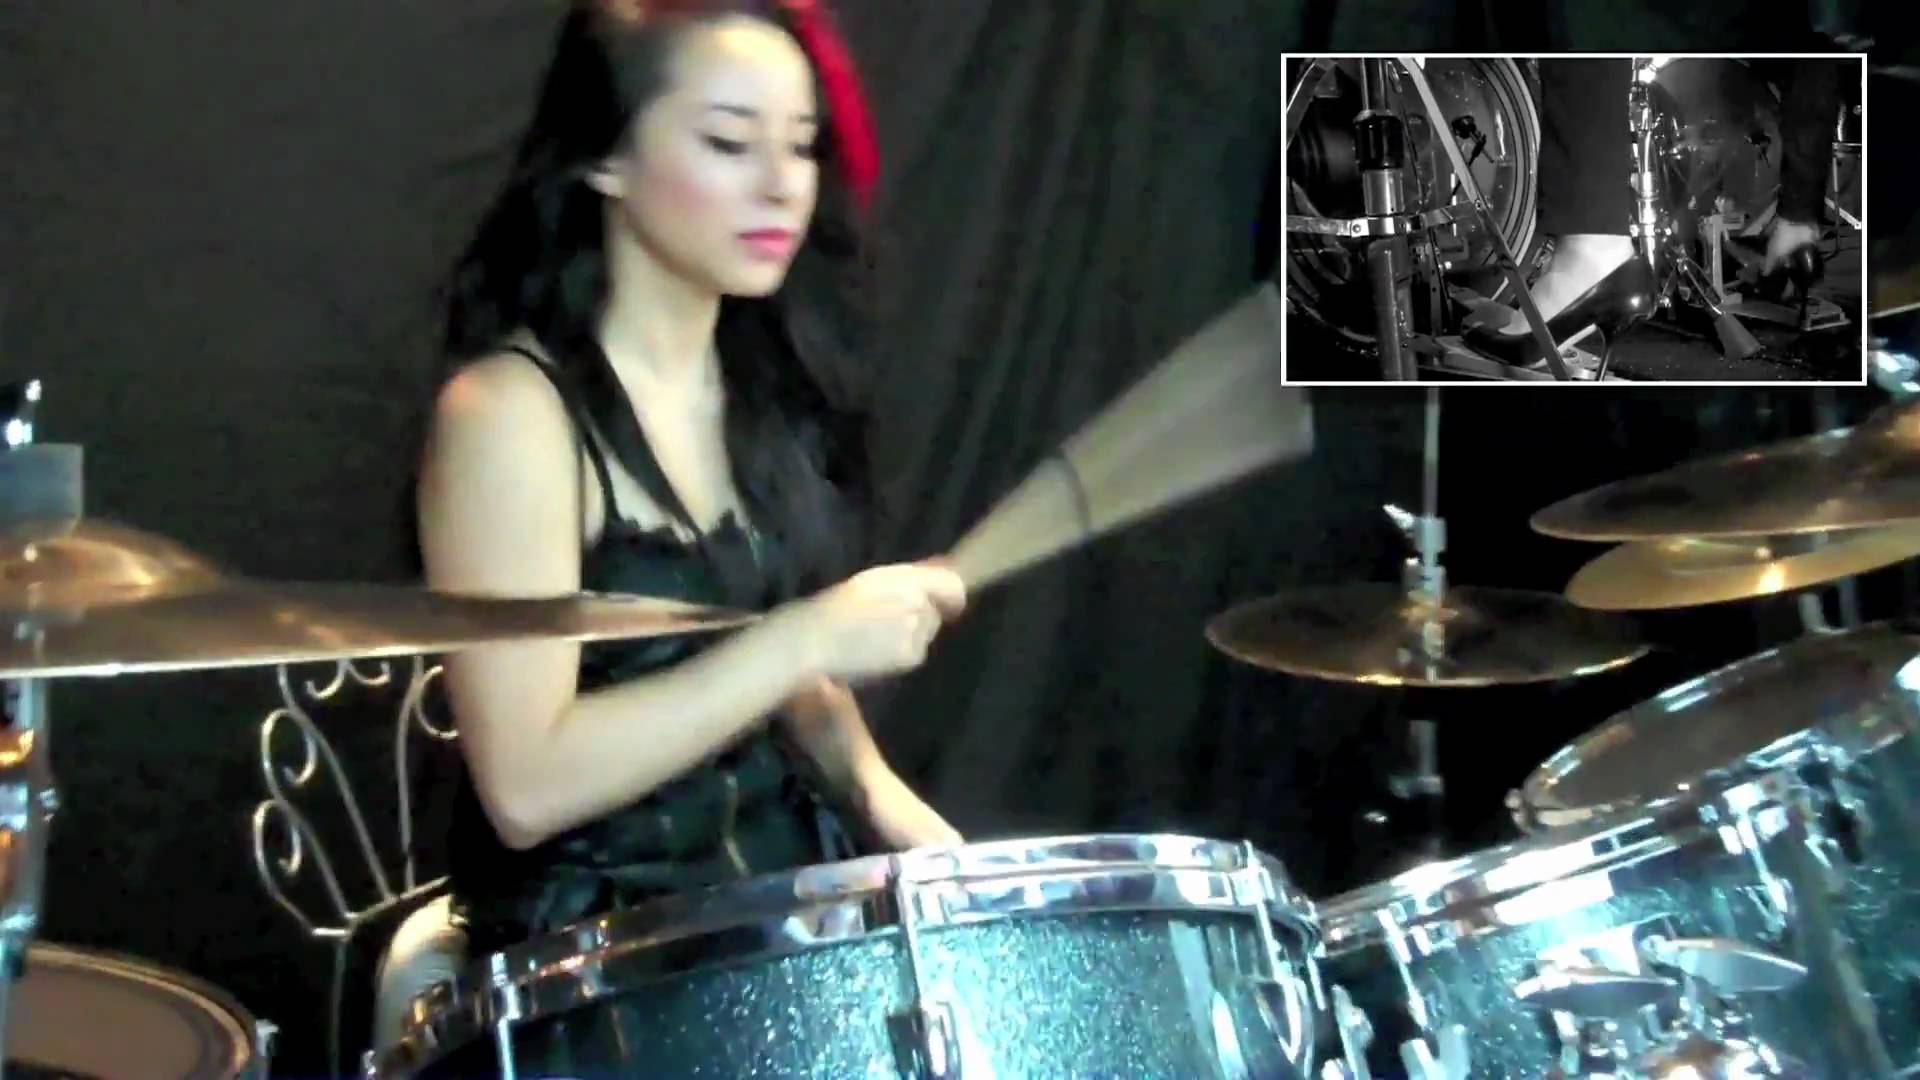 Lux Drummerette #7